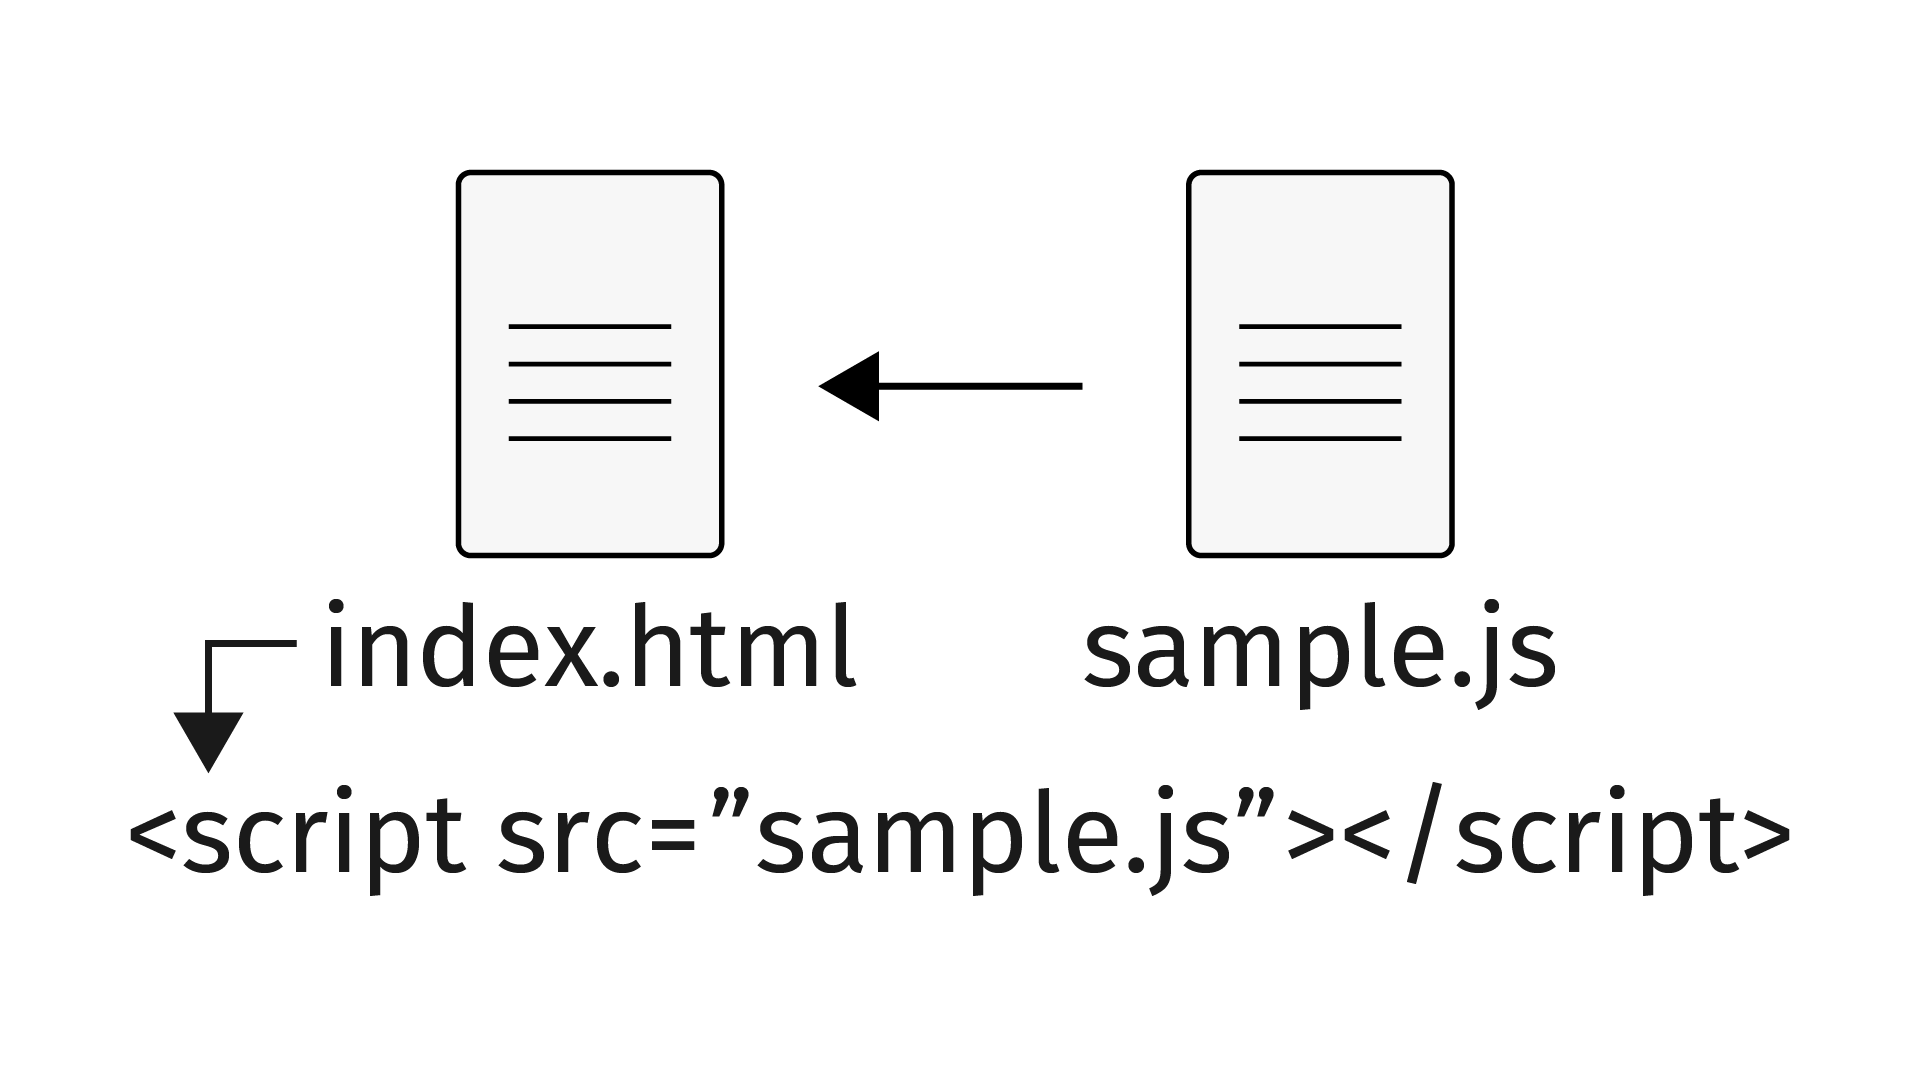 .jsのファイルはscriptタグのsrc属性にファイルのパスを指定して読み込む